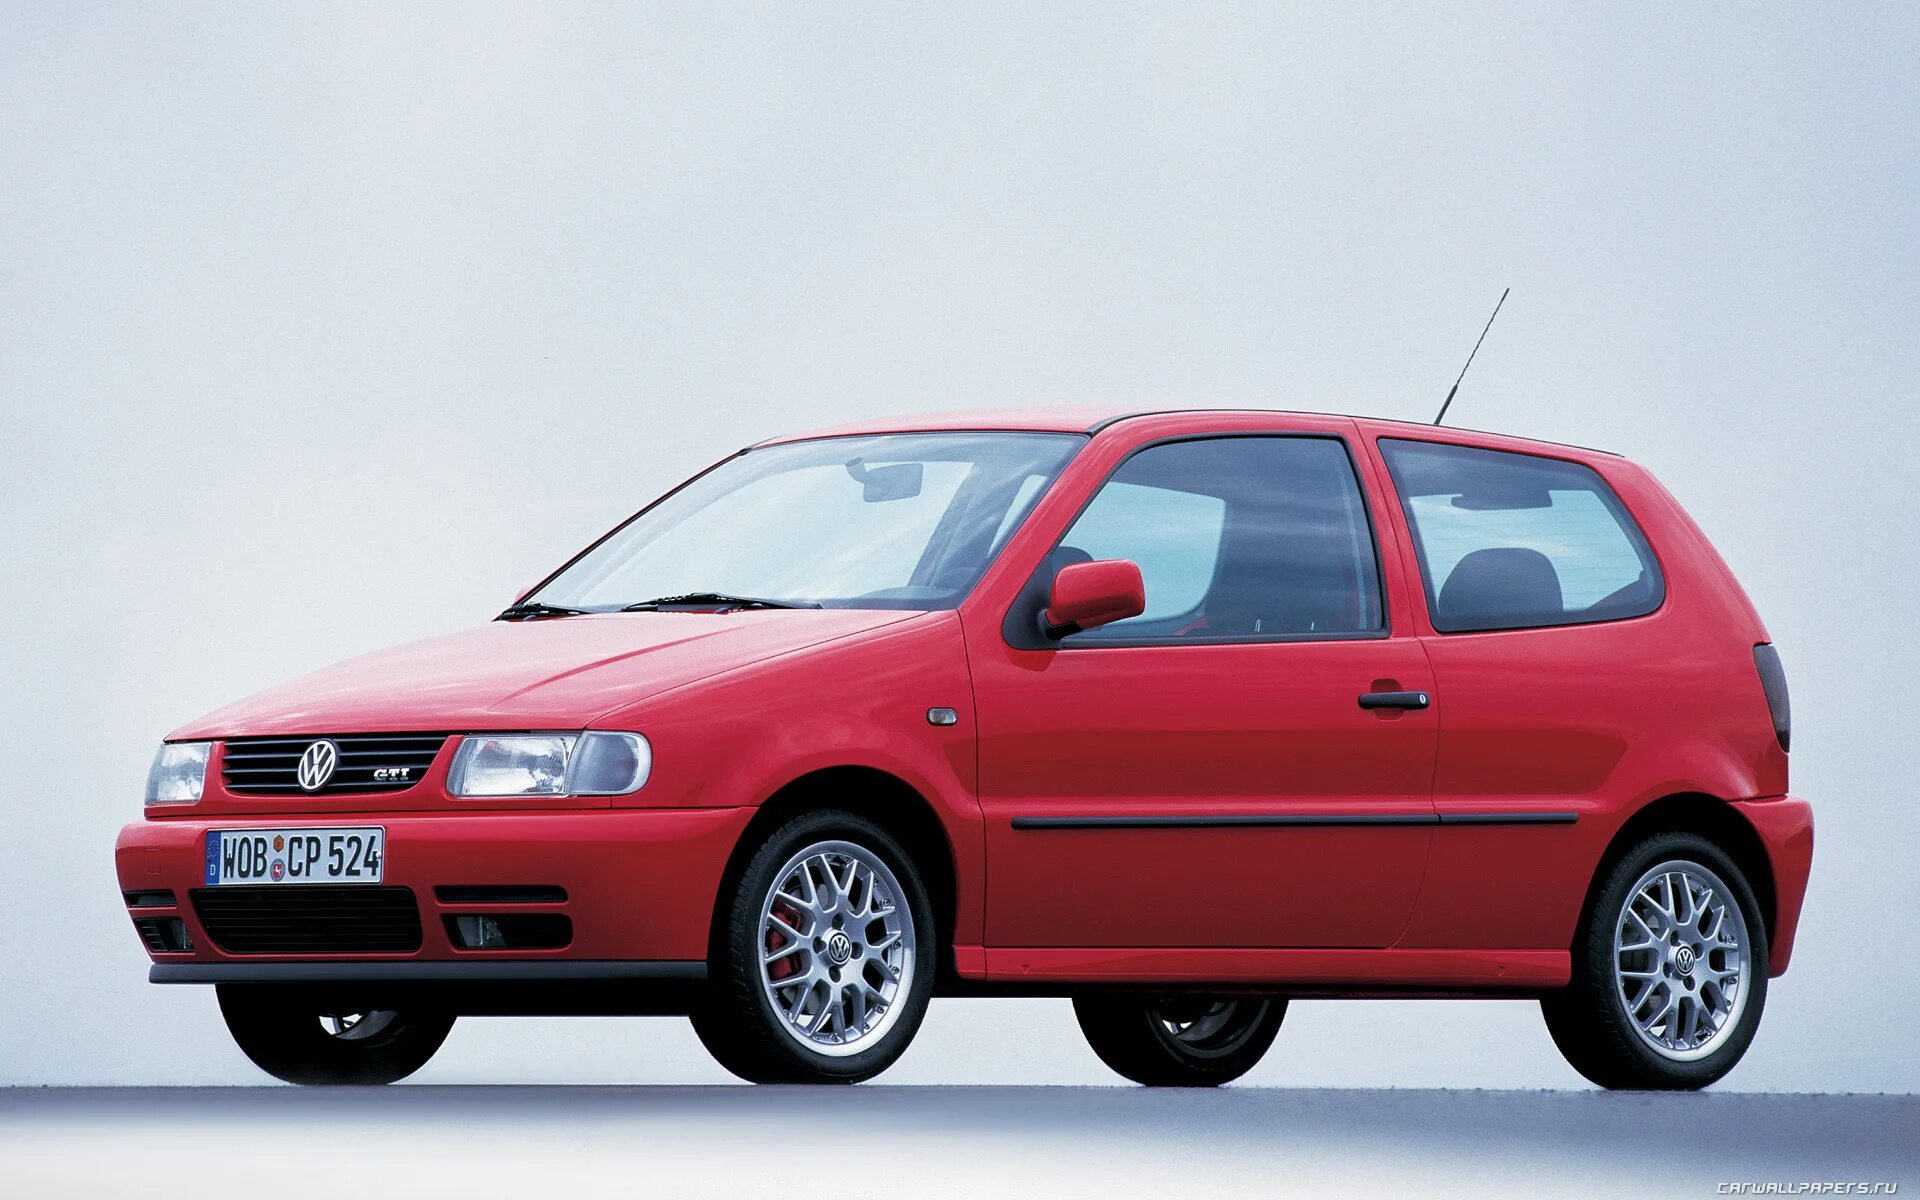 VW Polo 6n. Volkswagen Polo 2001 Hatchback. VW Polo 1996. Фольксваген поло 3 1997. Фольксваген поло 3 хэтчбек